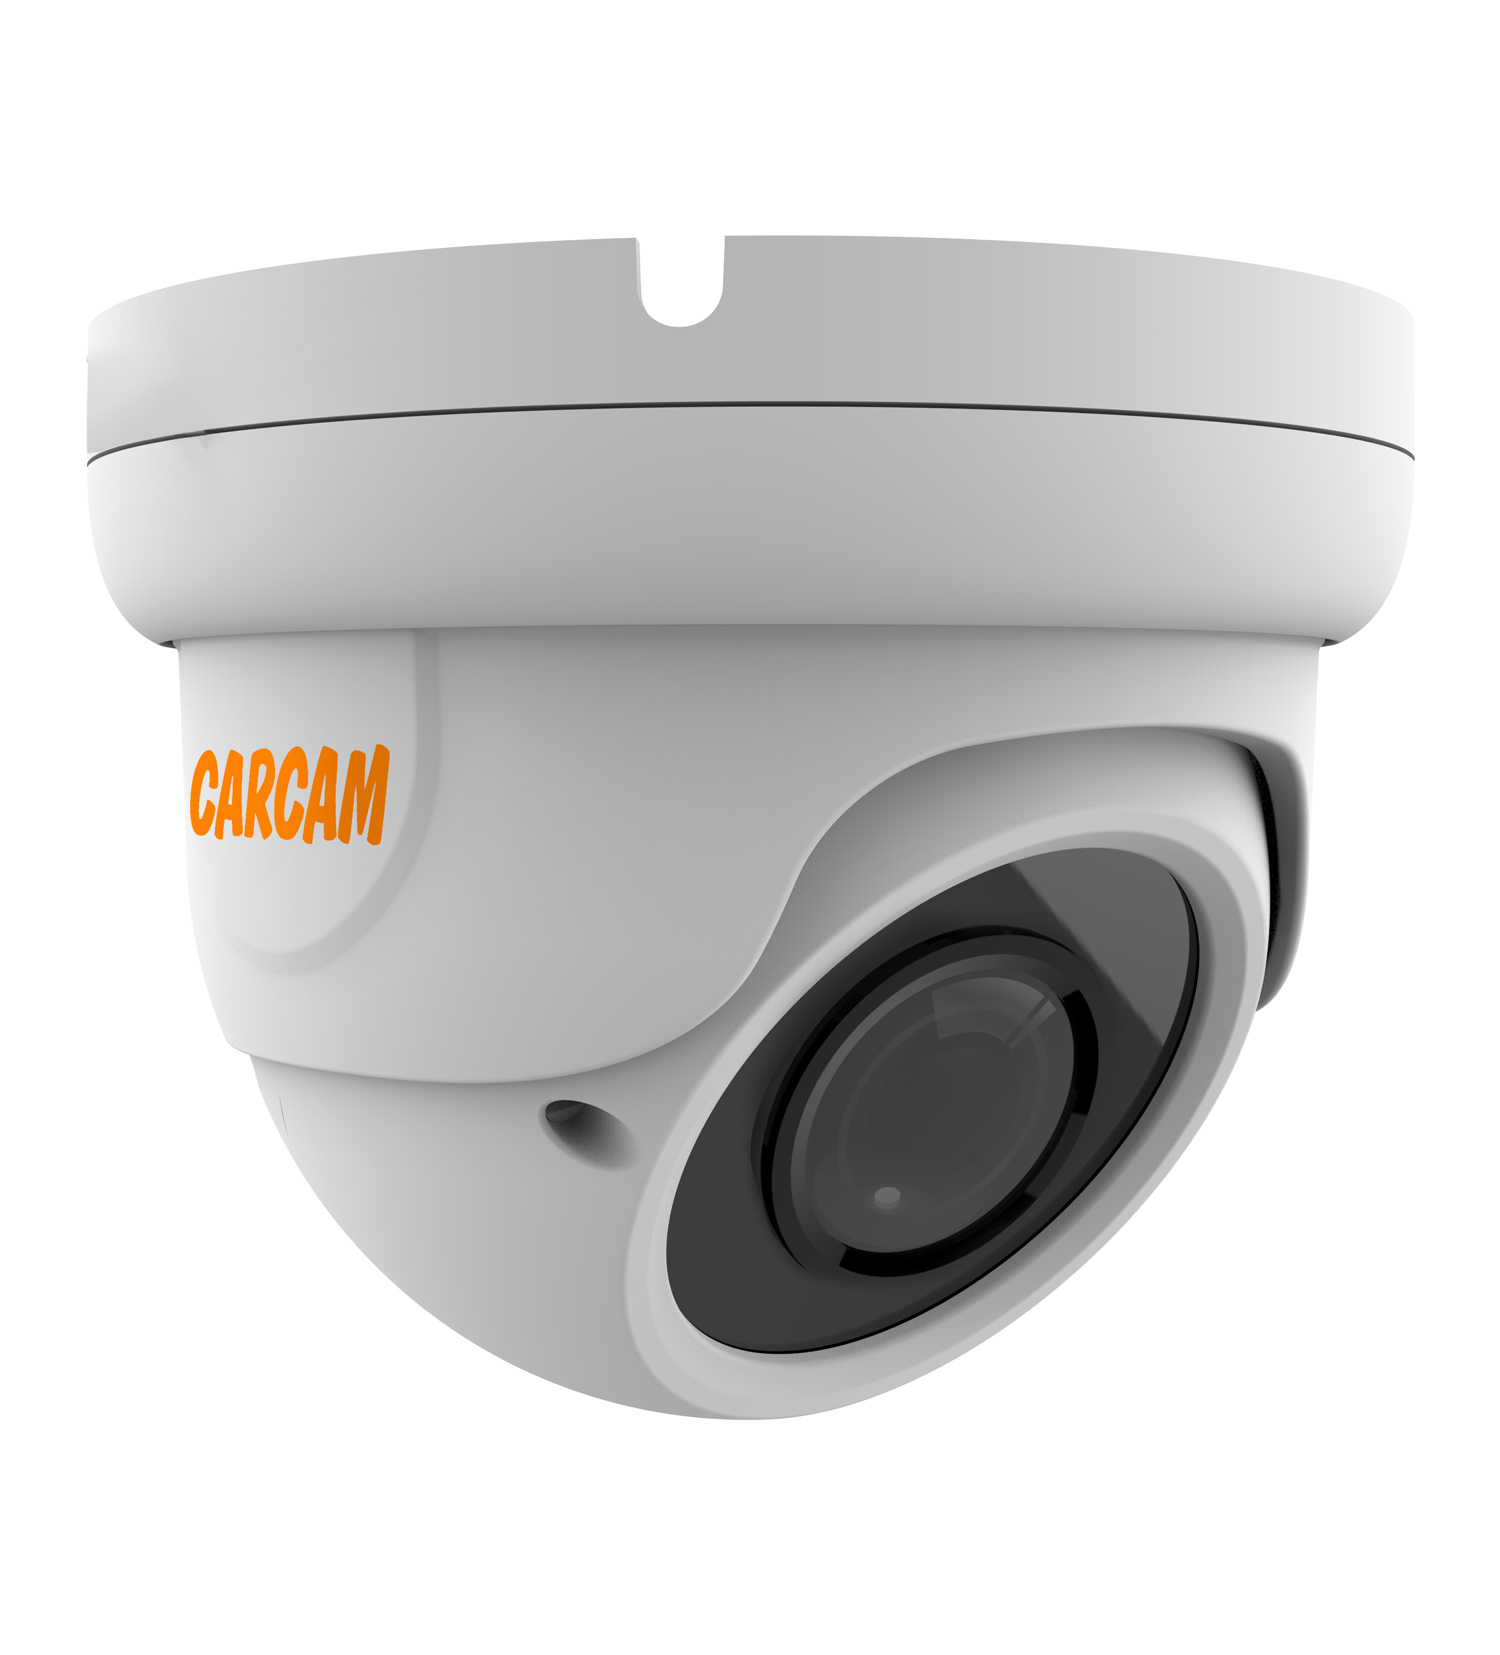  AHD- CARCAM 5MP Dome HD Camera 5041 (2.8-12mm)